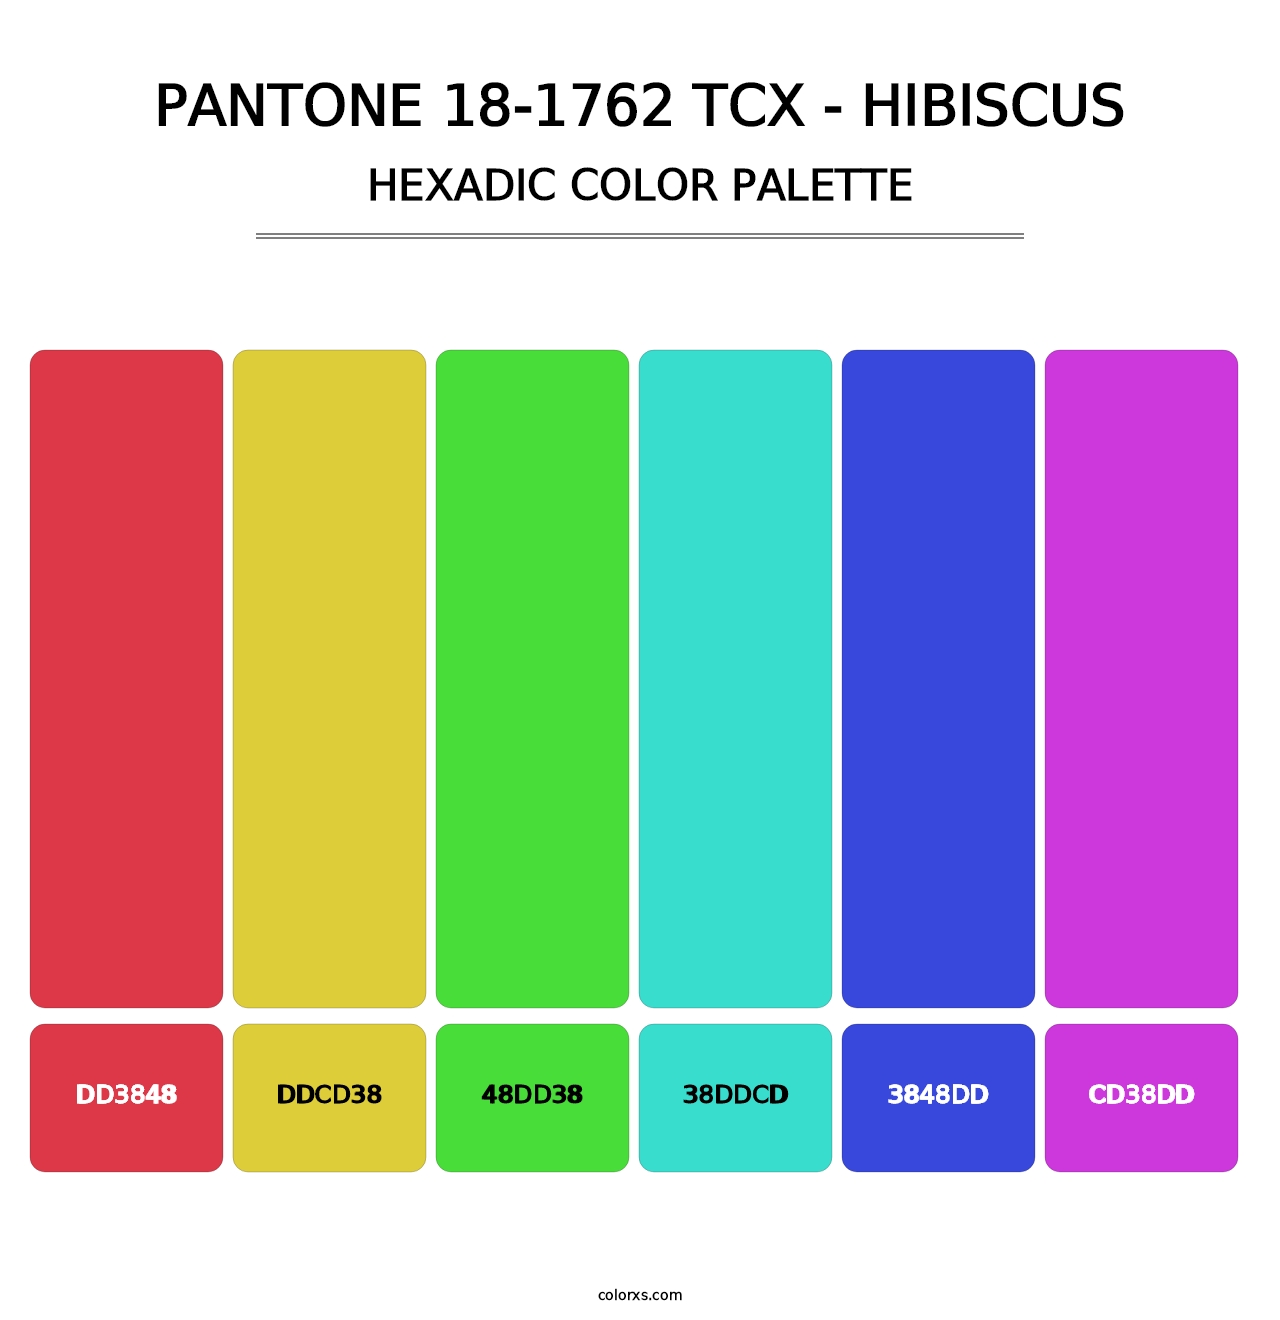 PANTONE 18-1762 TCX - Hibiscus - Hexadic Color Palette